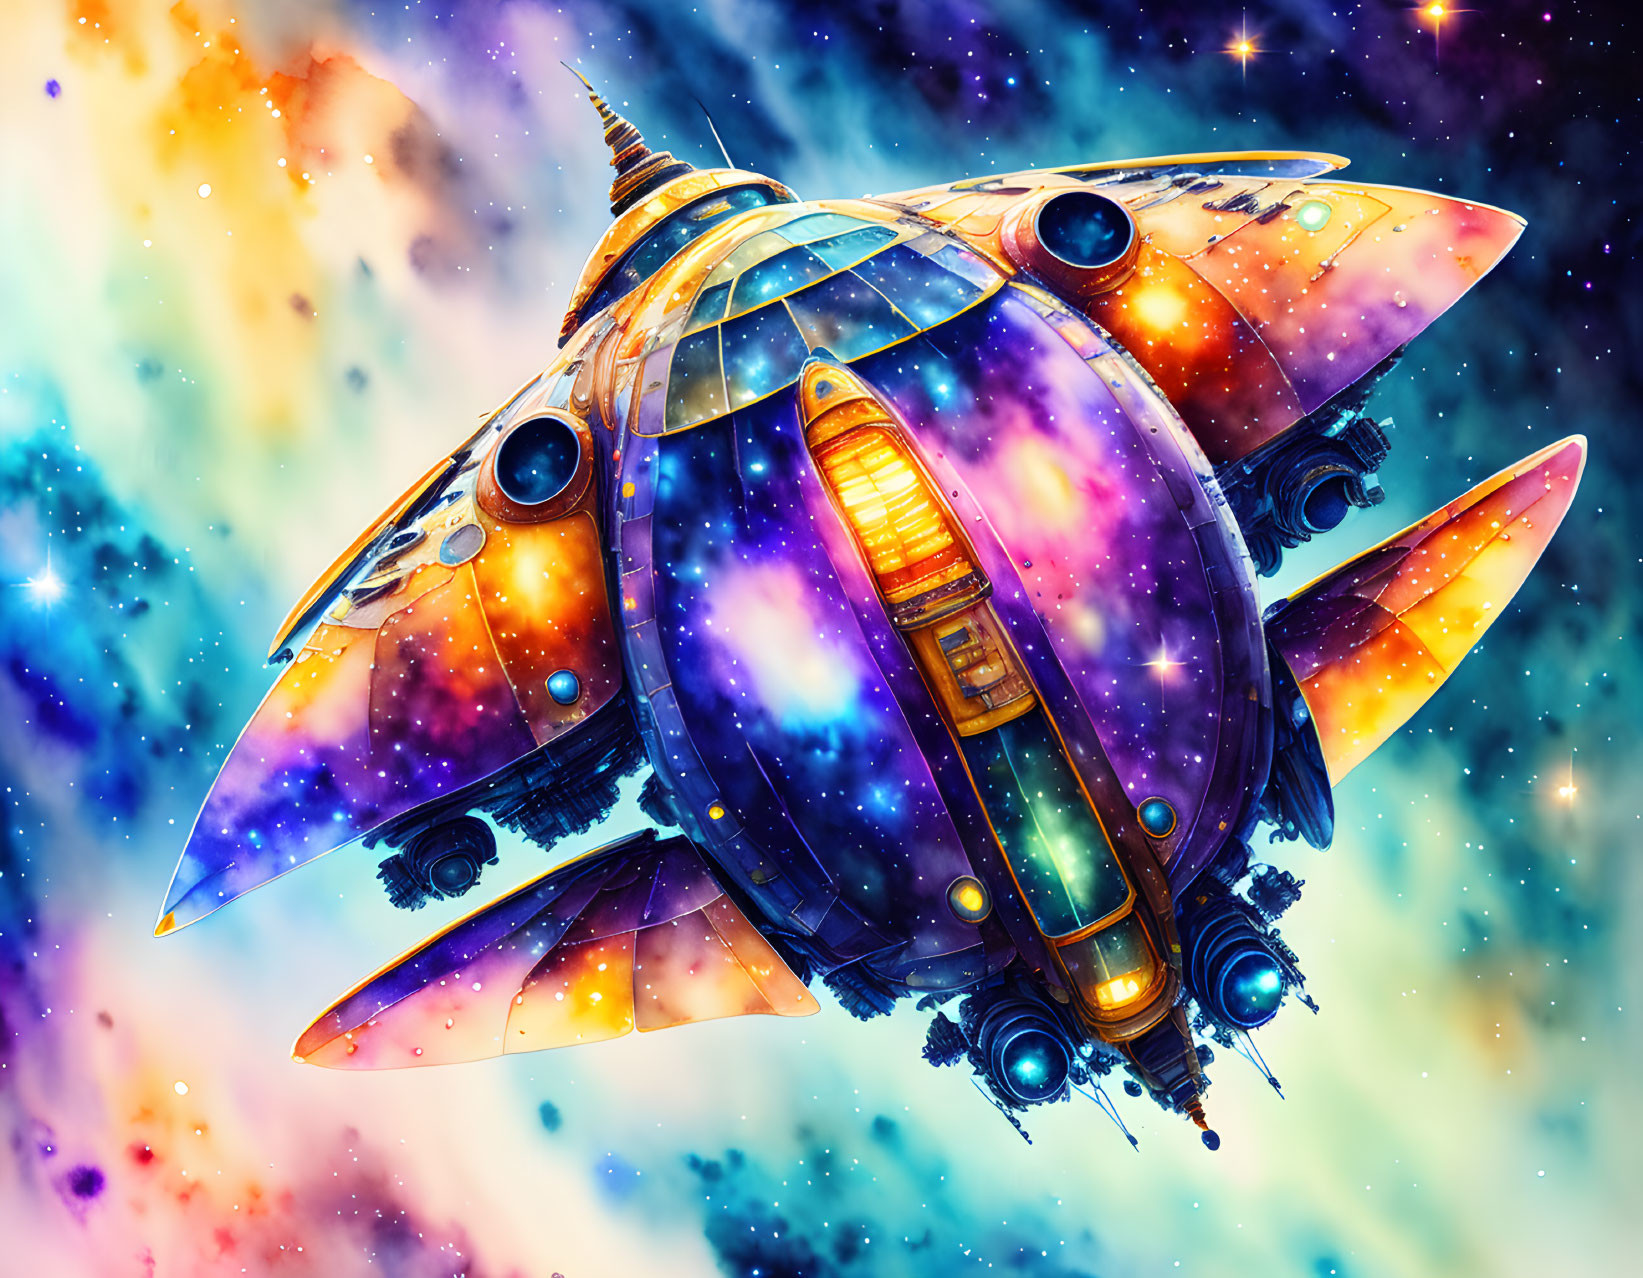 Spaceship, Sereniny Firefly, watercolor 